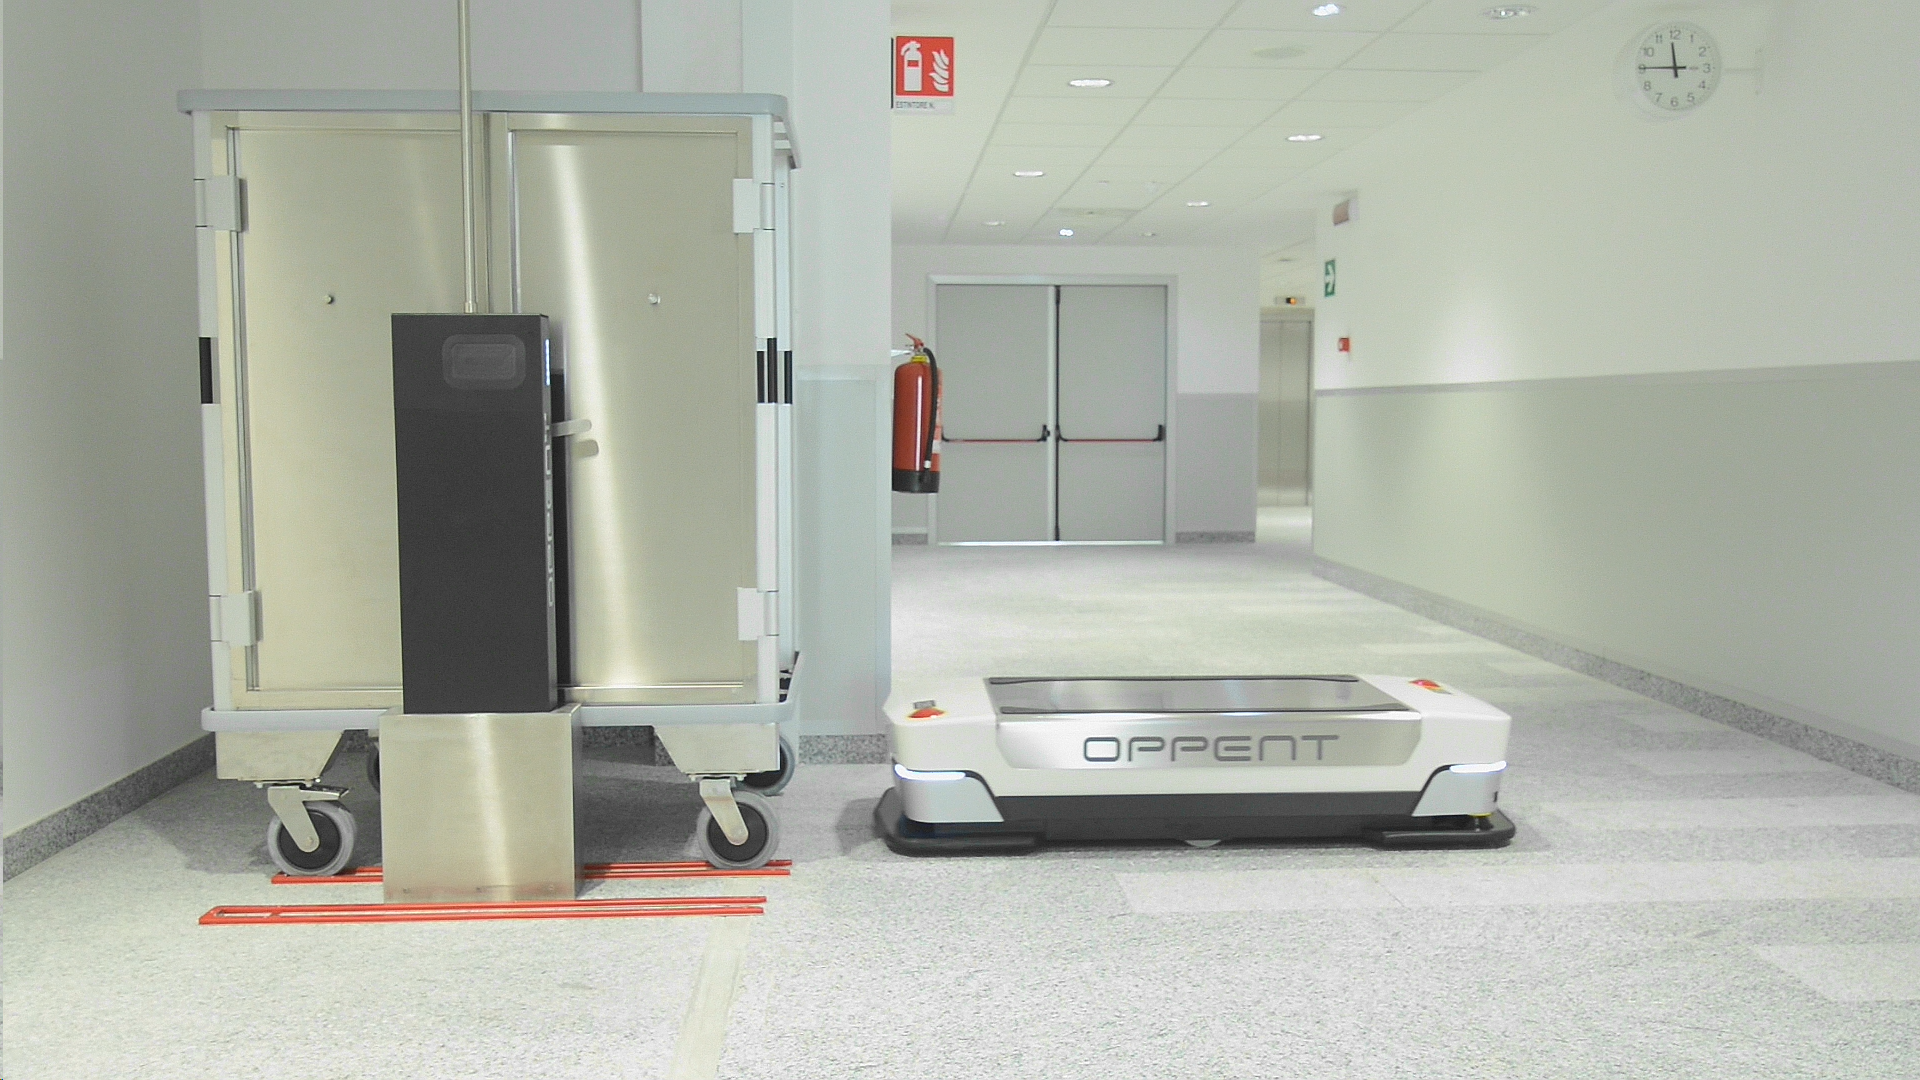 EVOcart - the Mobile Robot for hospital intralogistics